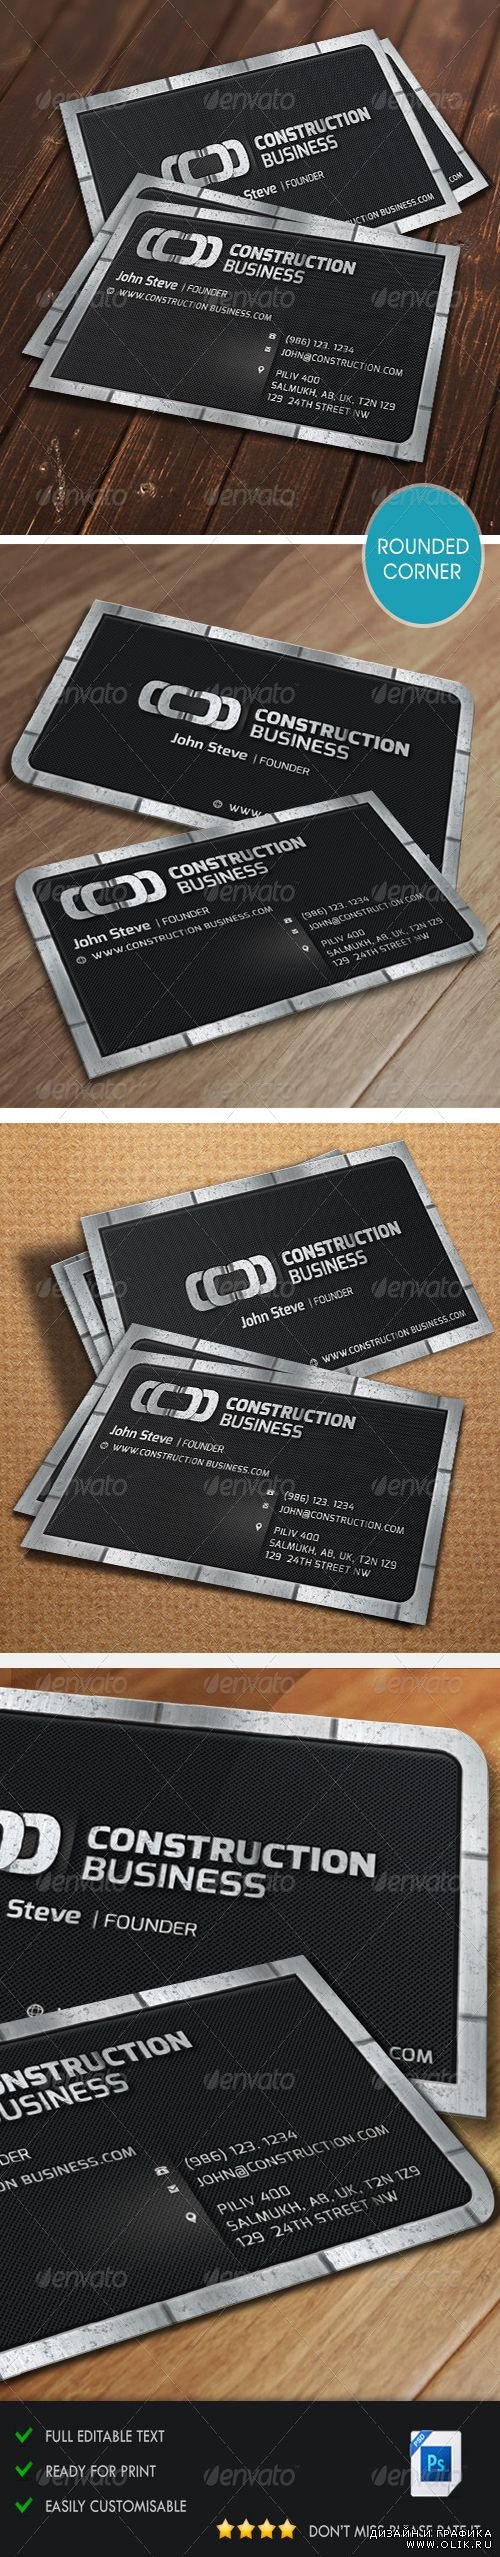 PSD - Construction Metalic Business Card